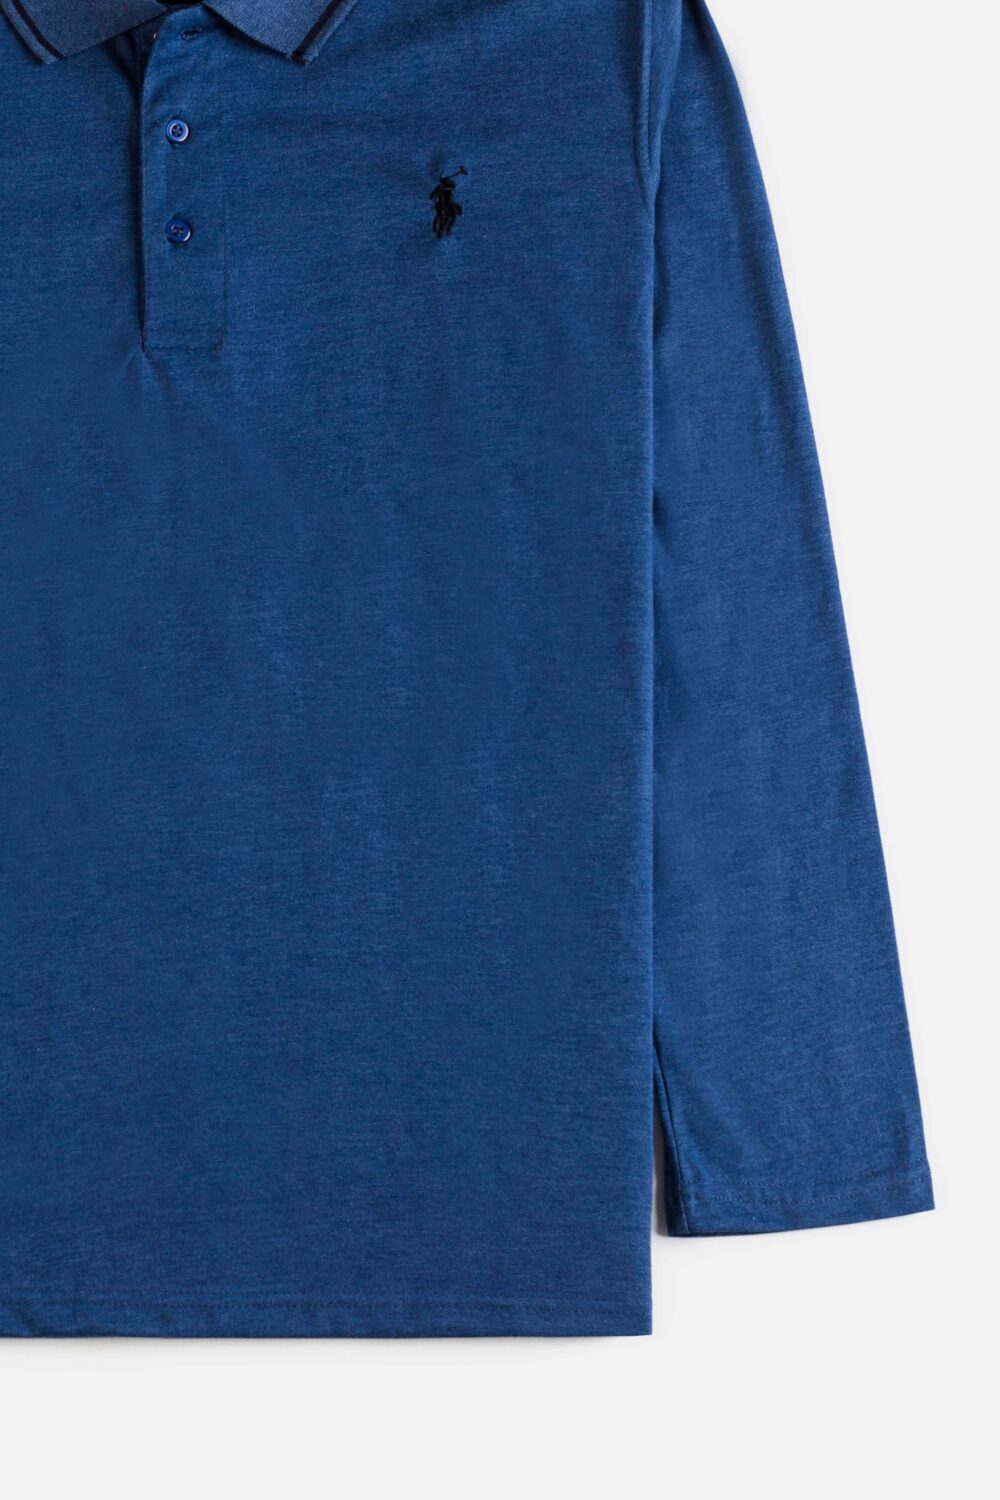 RL Premium Cotton Full Polo – Yale Blue